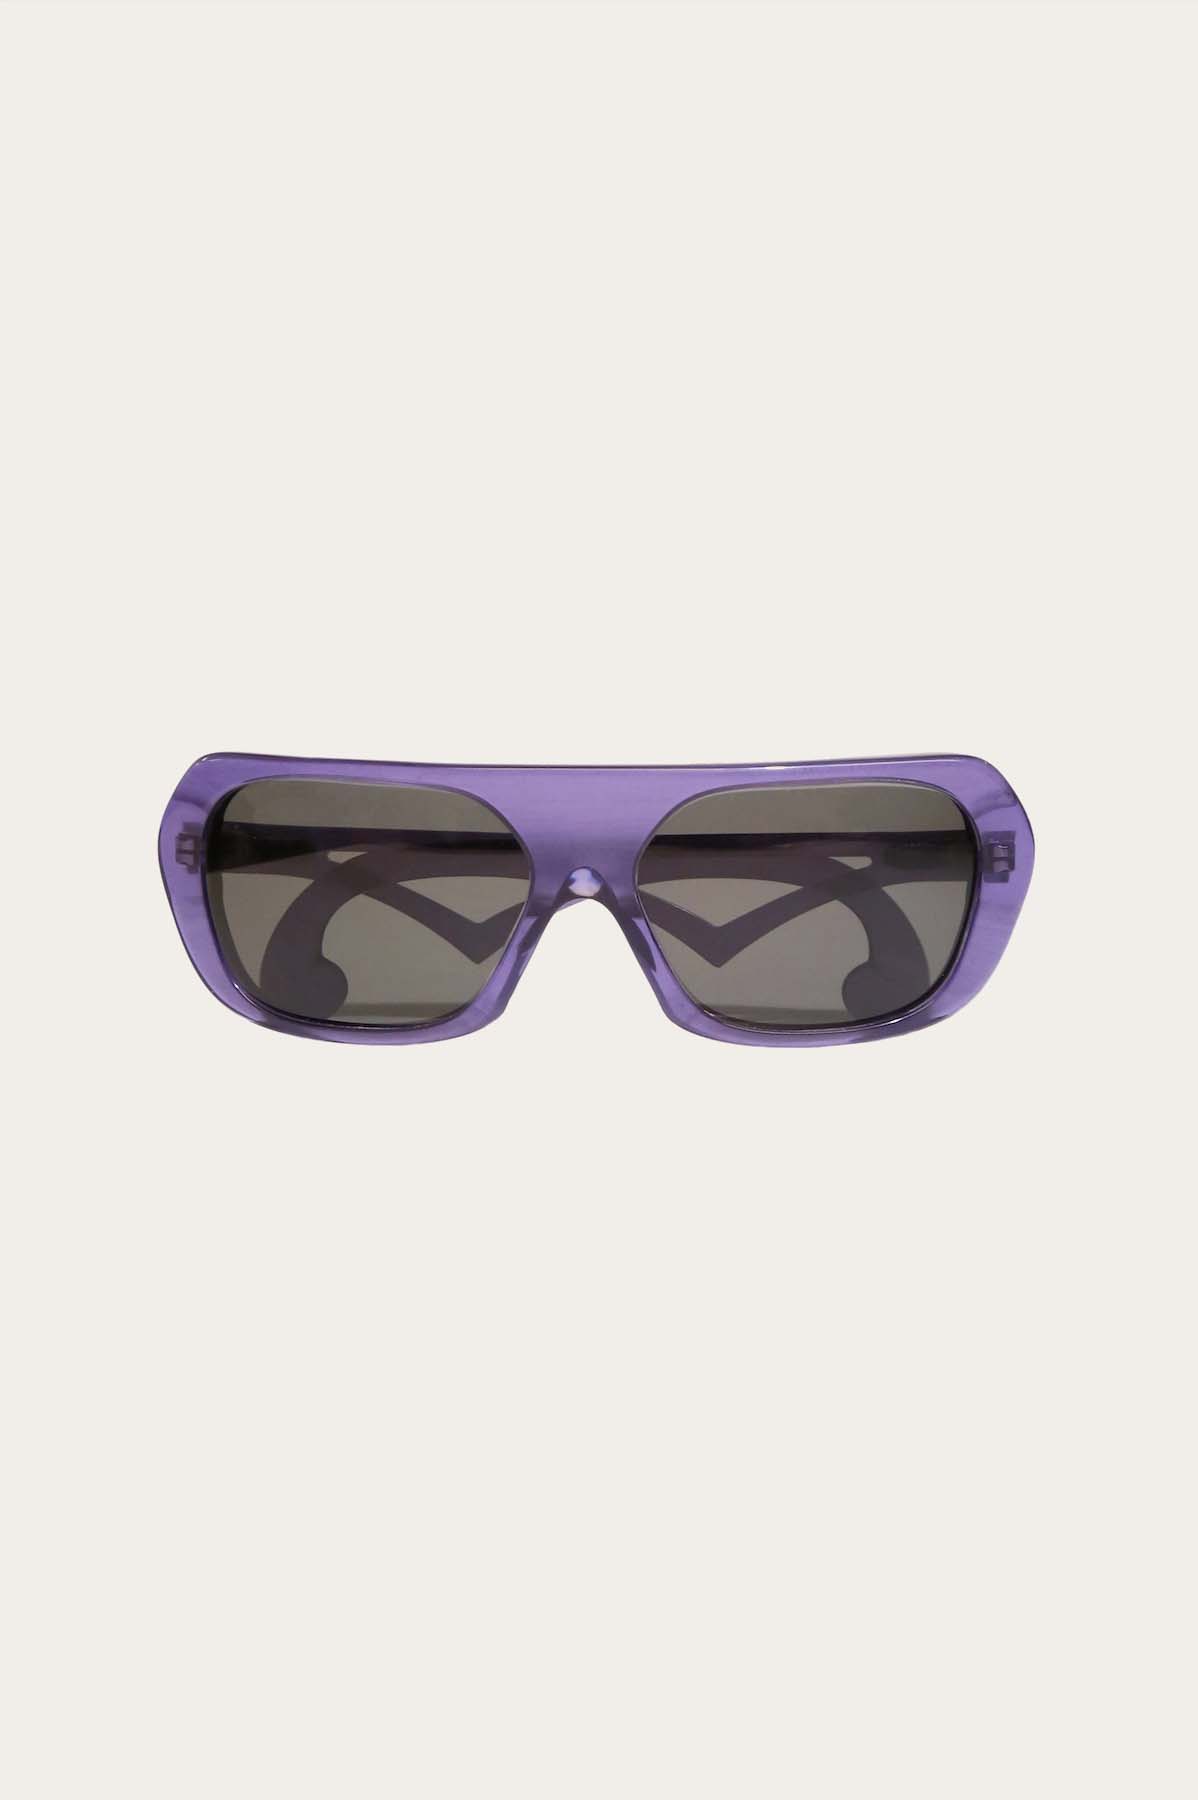 THE ANNA Purple, large eyeglass frame, custom-made Mod eyewear straight off our Fall 2019 Runway